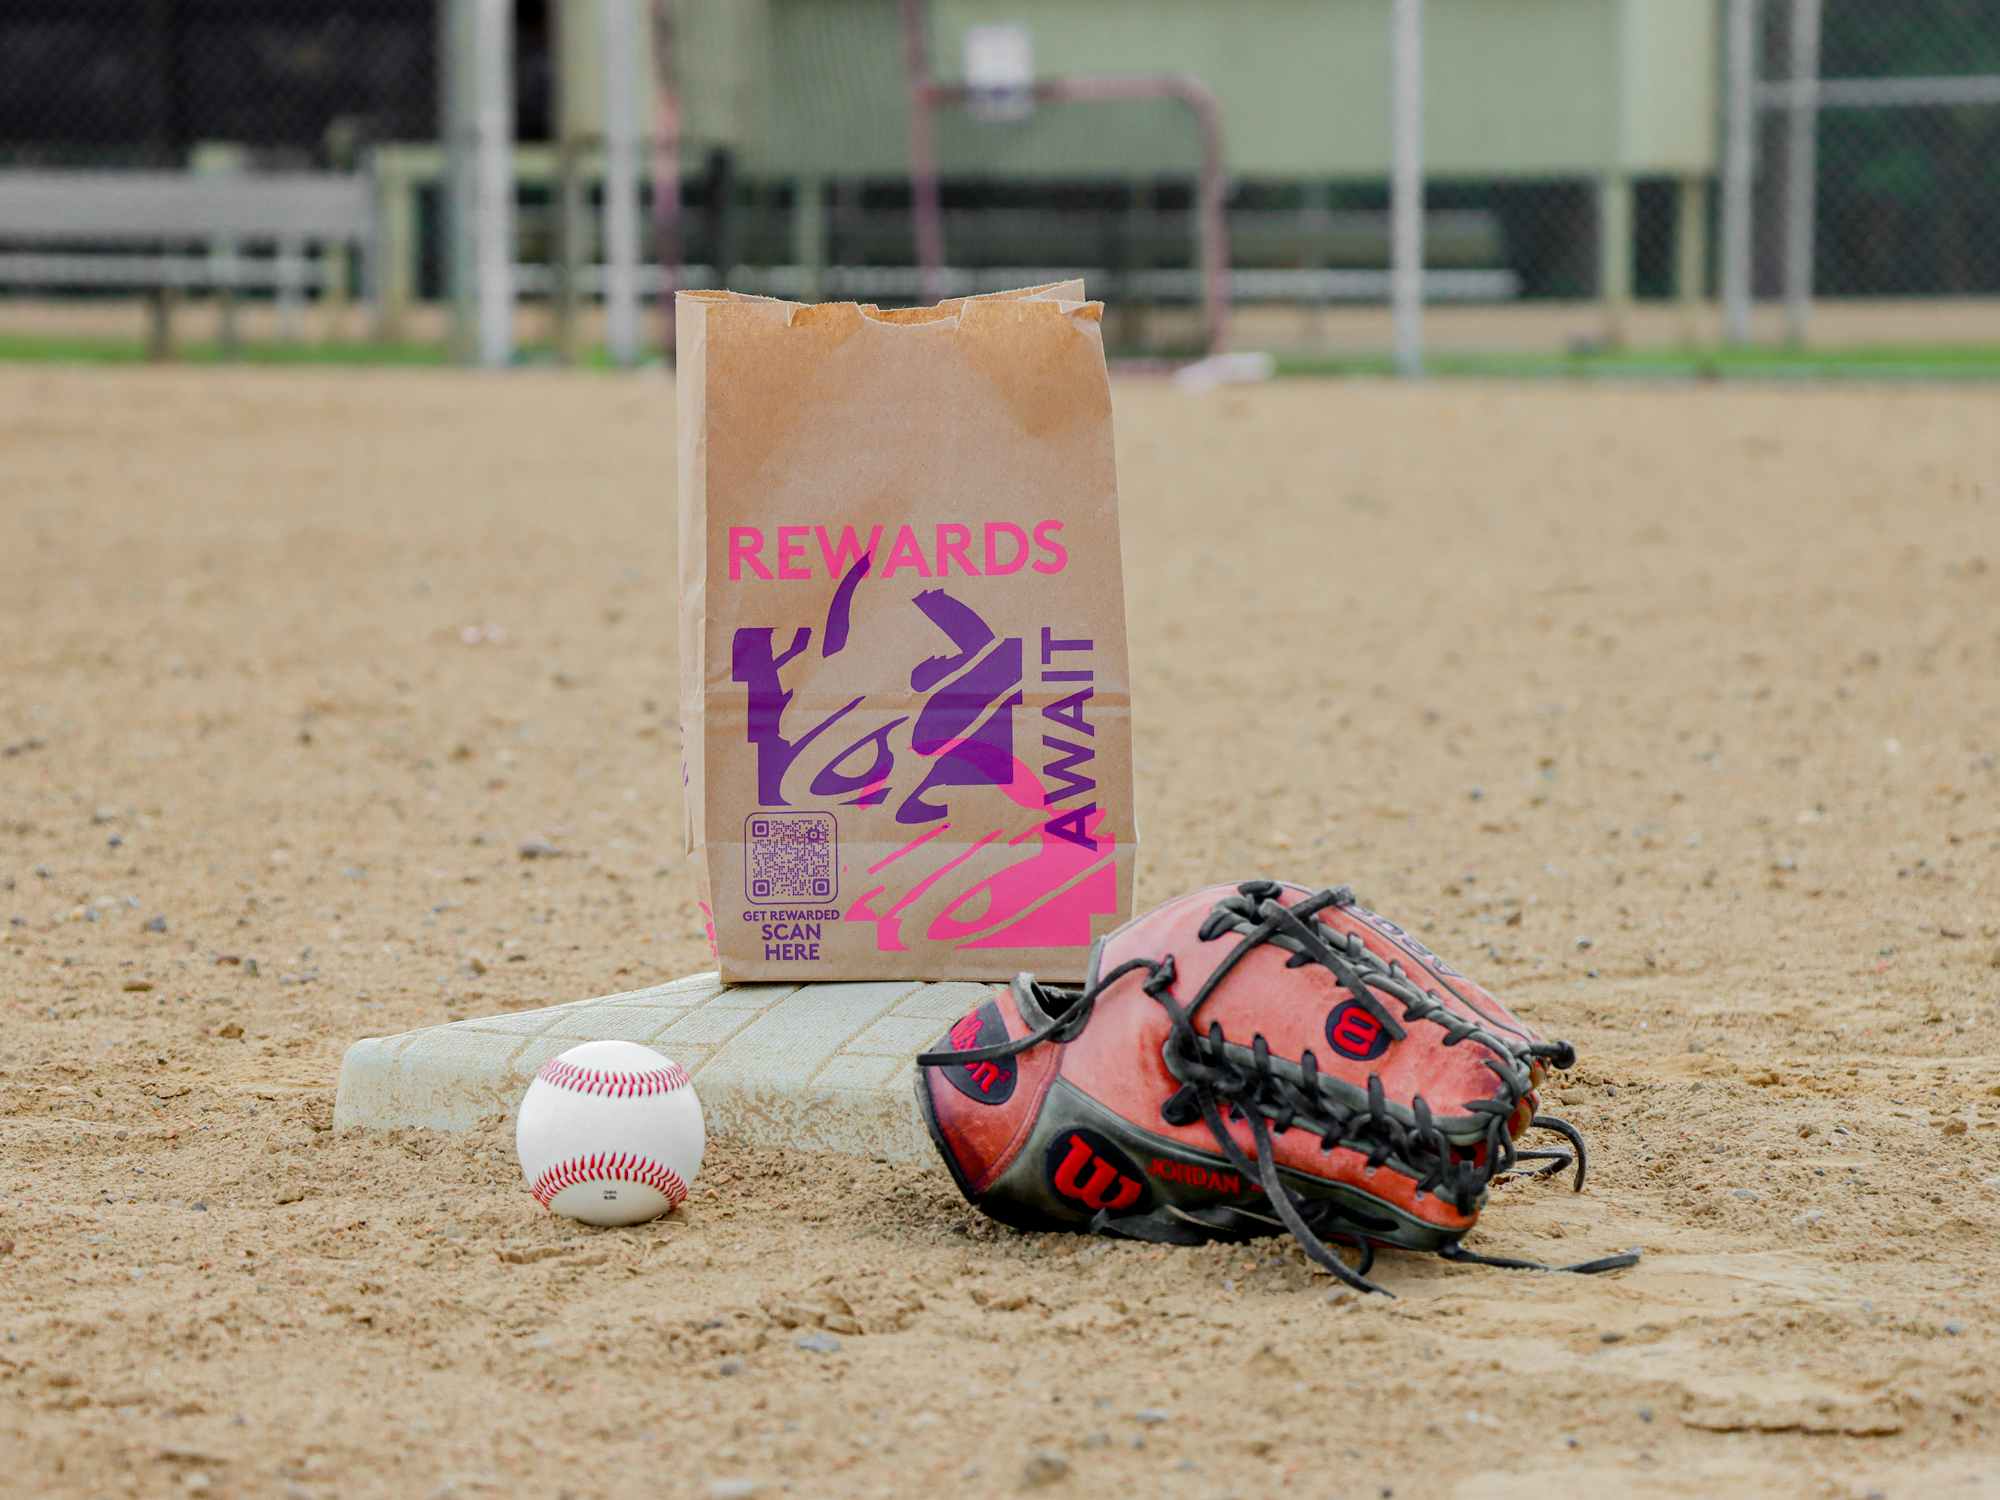 a taco bell bag, baseball glove, and a baseball sitting on a base